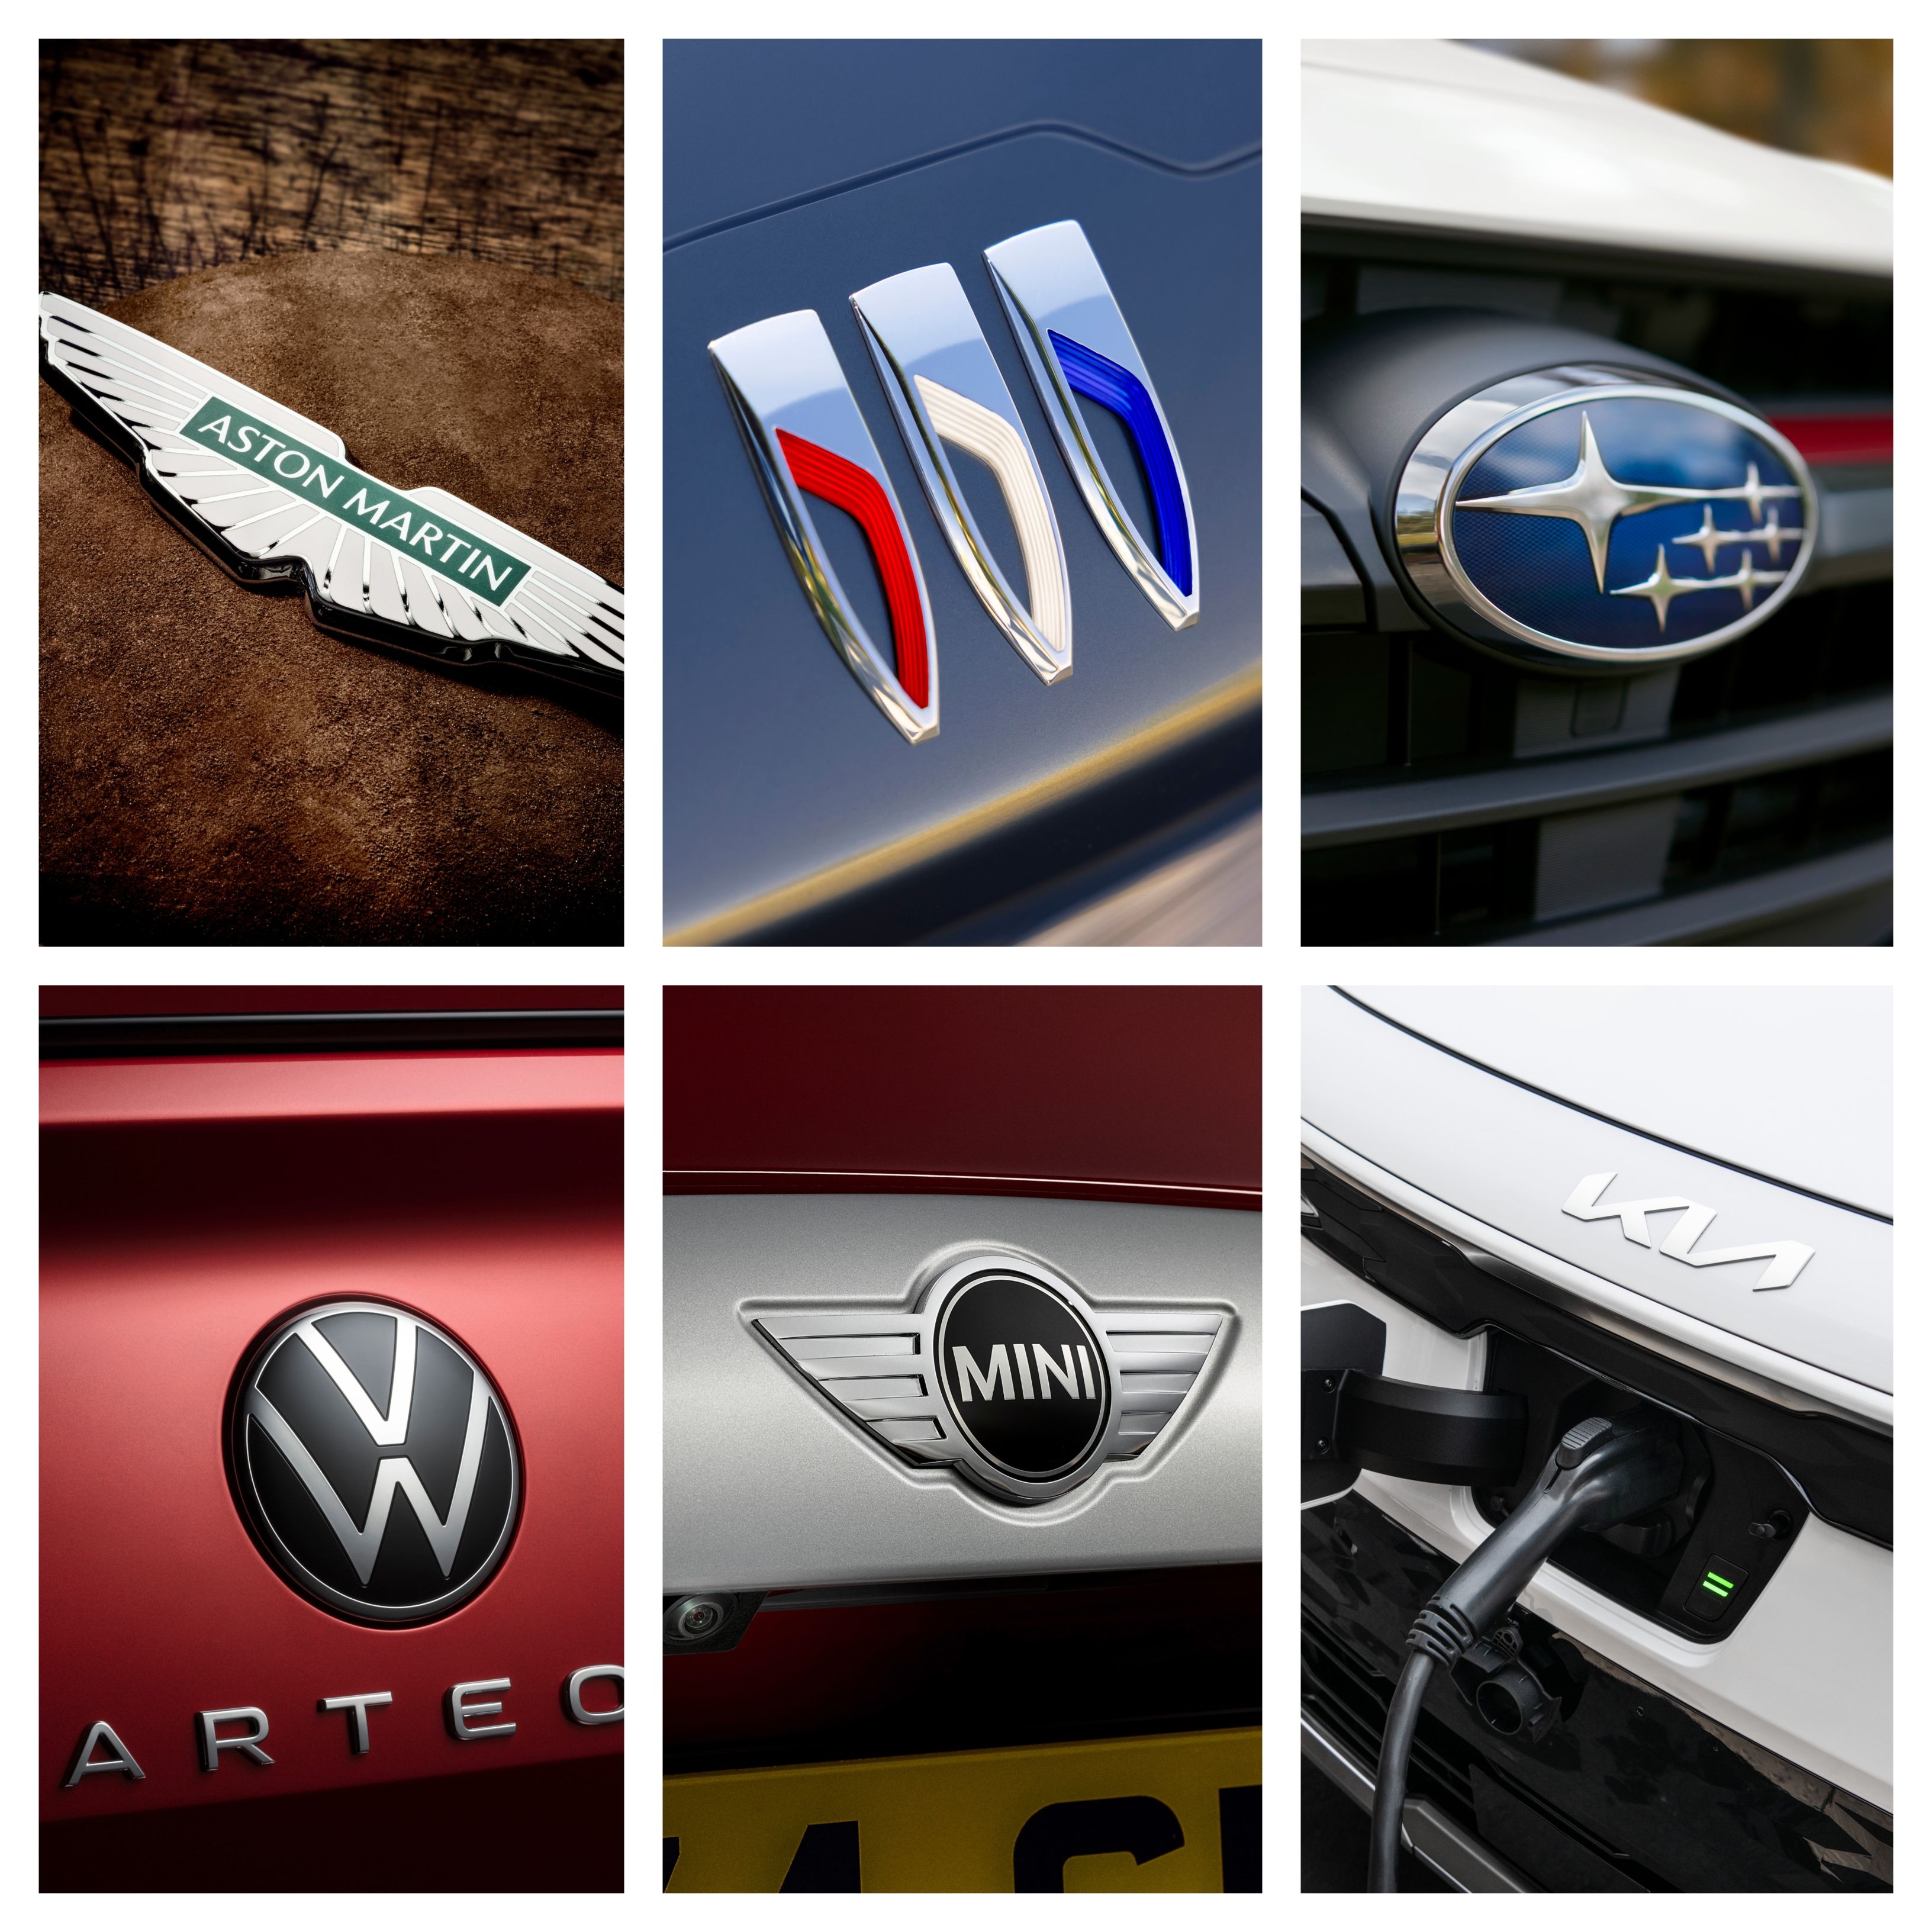 Seven car brands that have returned to flat logo designs